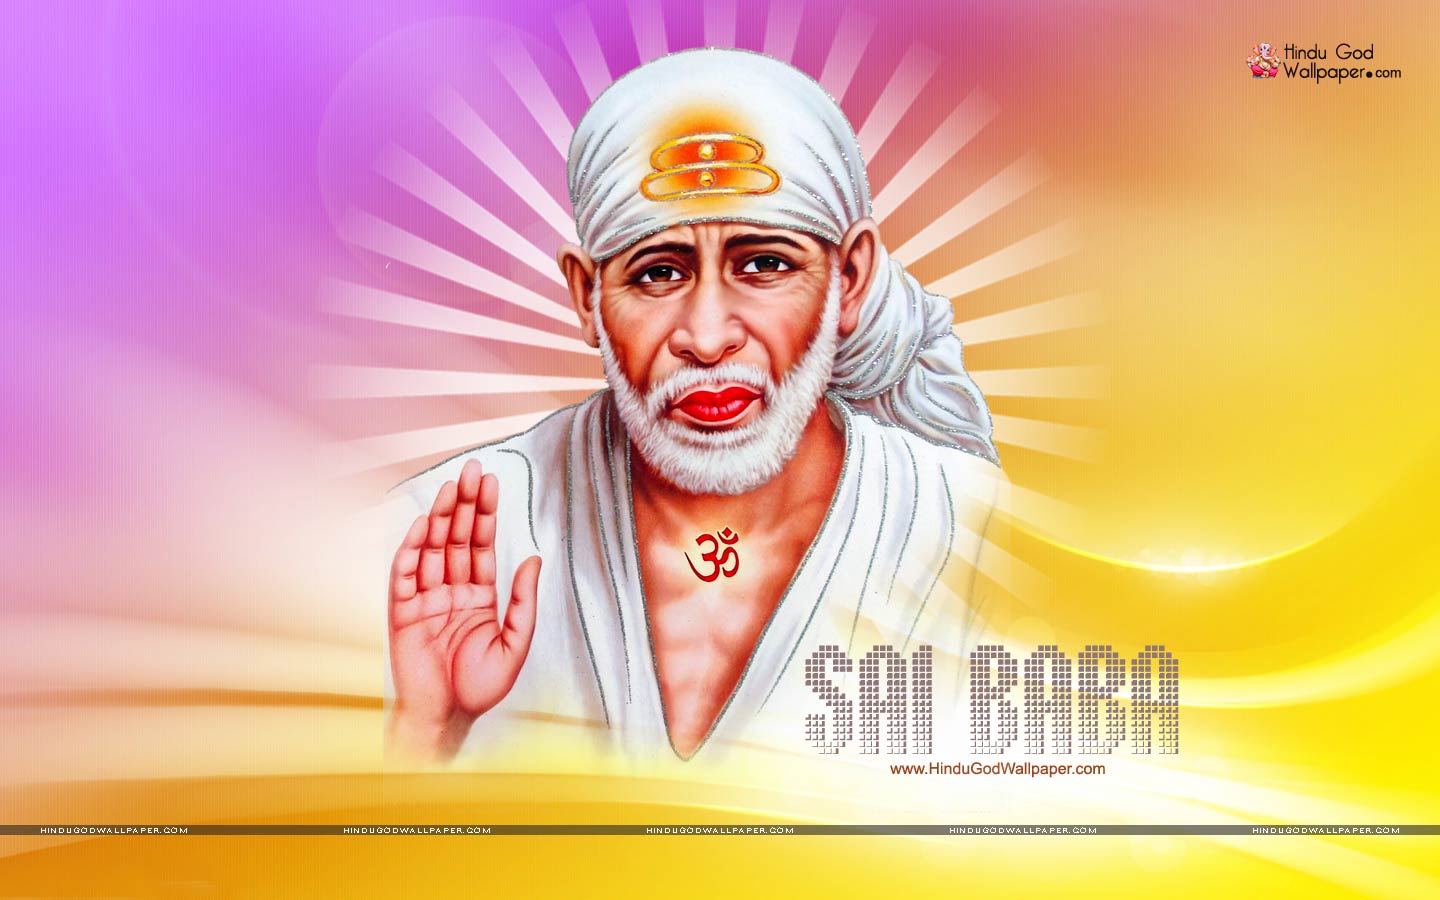 Sai Baba Wallpaper Full Size HD Images & Photos Free Download